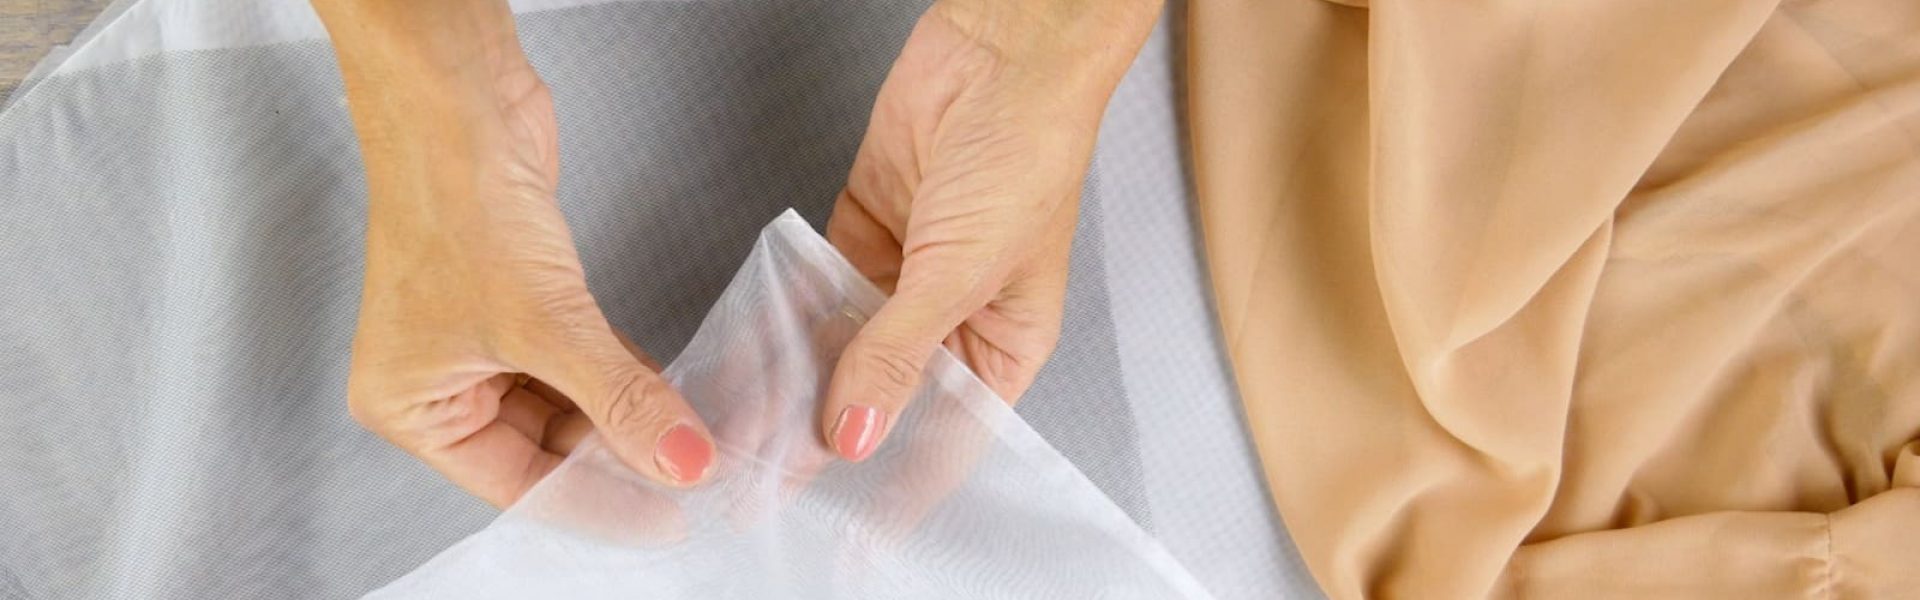 Sewing with lightweight fabrics.